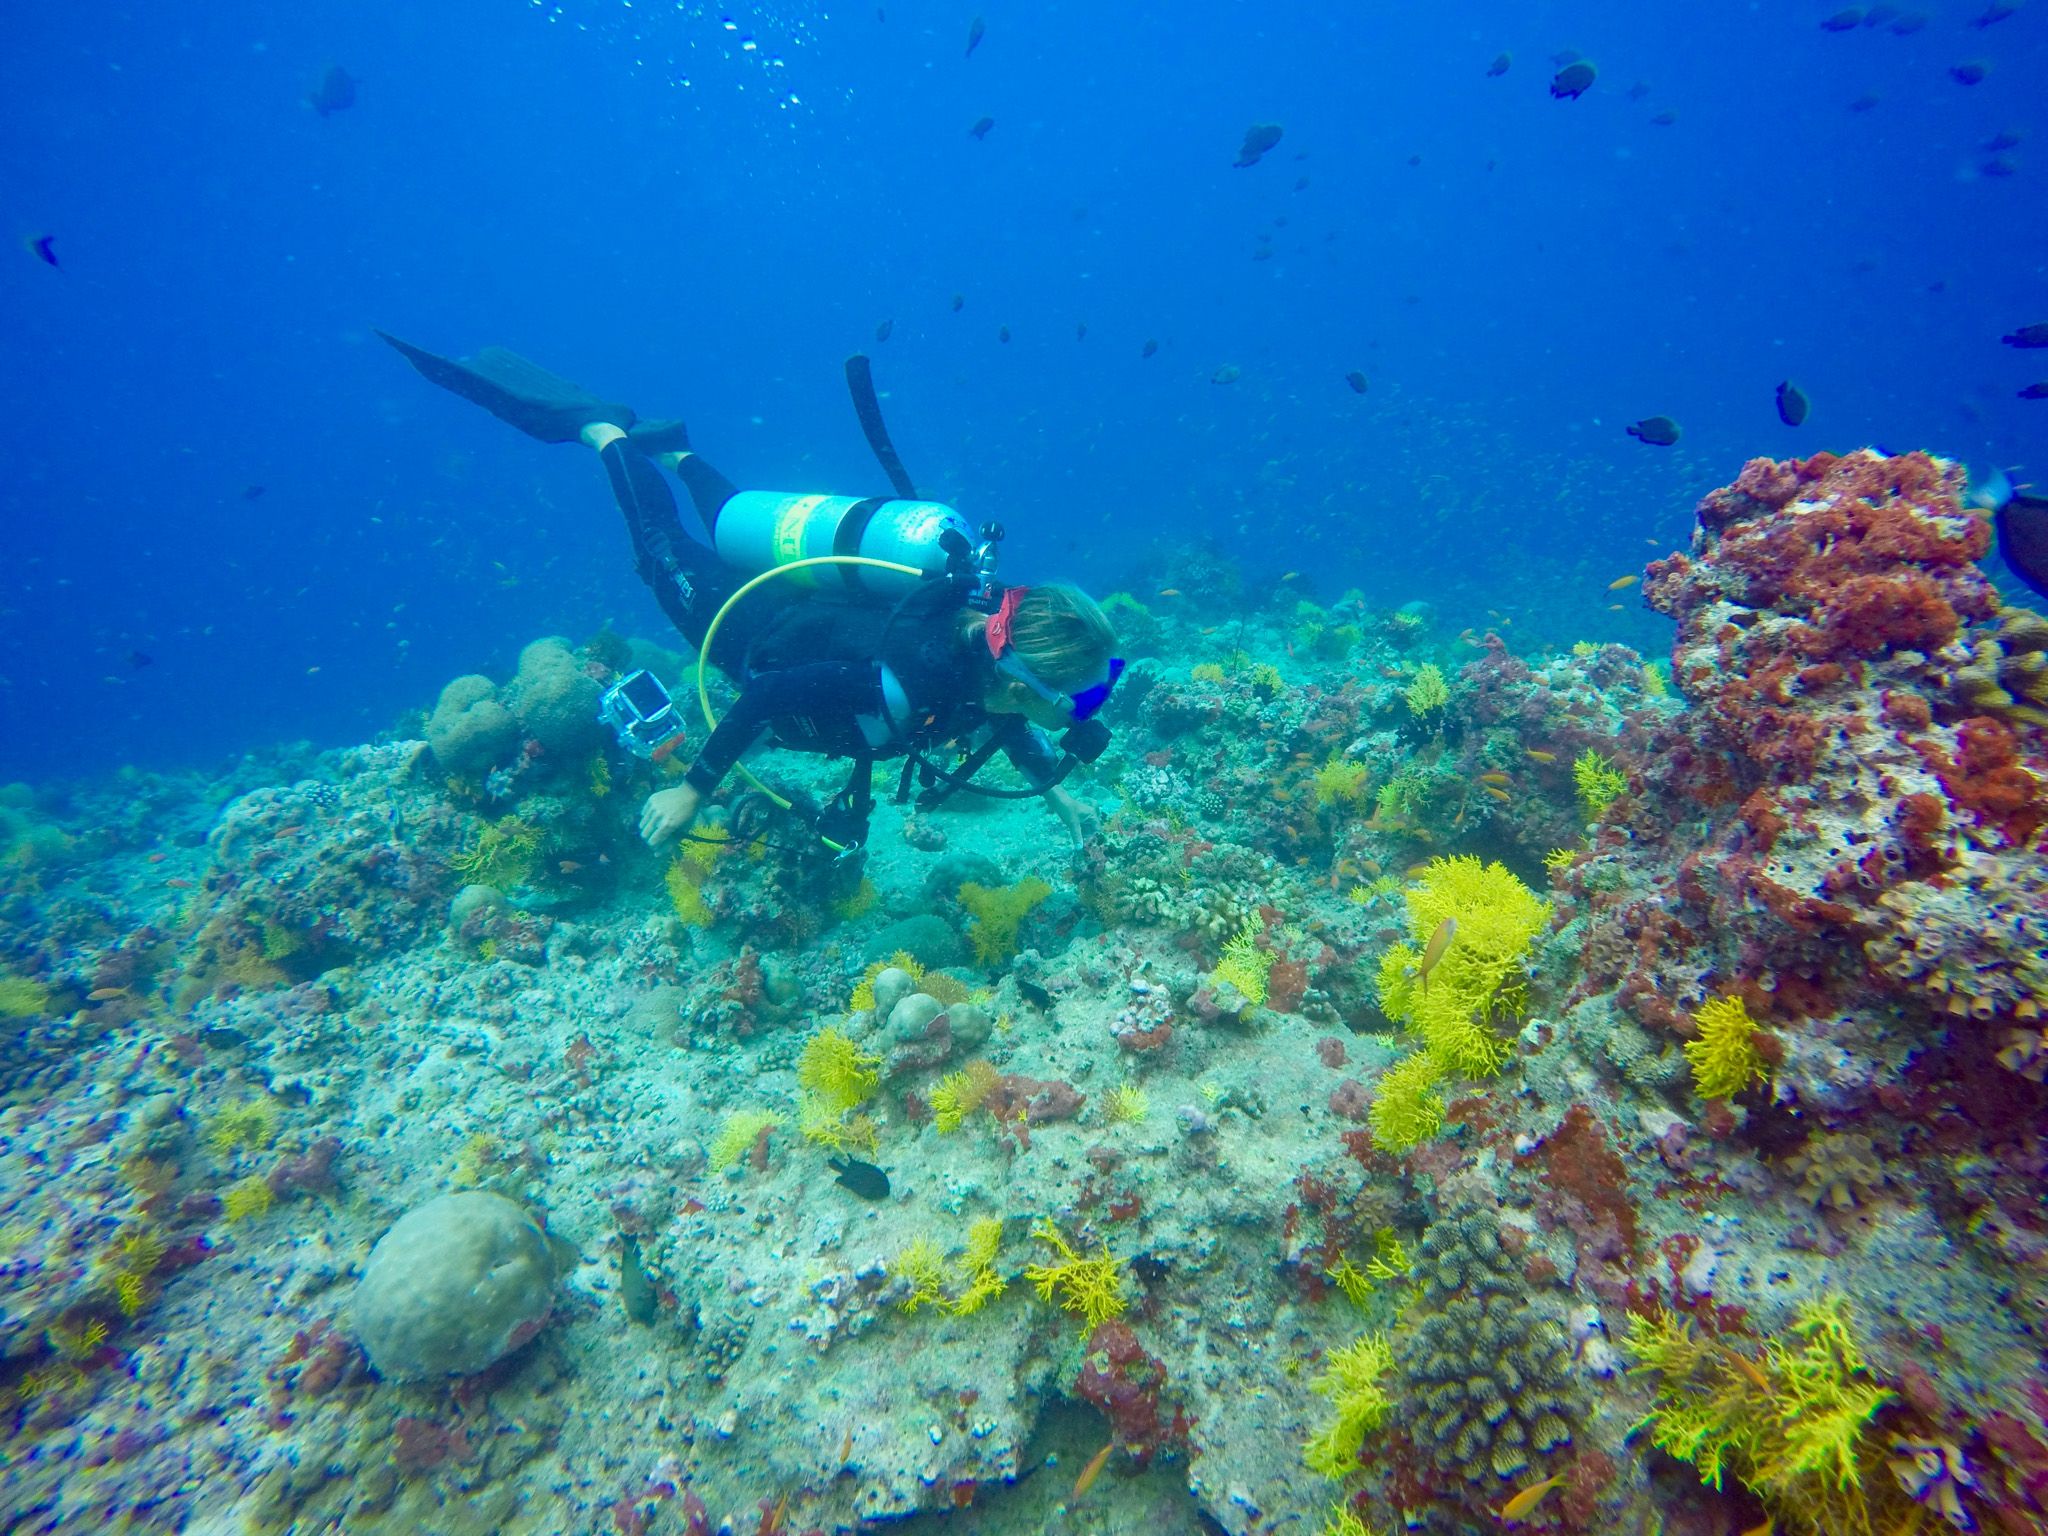 Malediven-Meeresbiologin Chiara Fumagalli im Interview